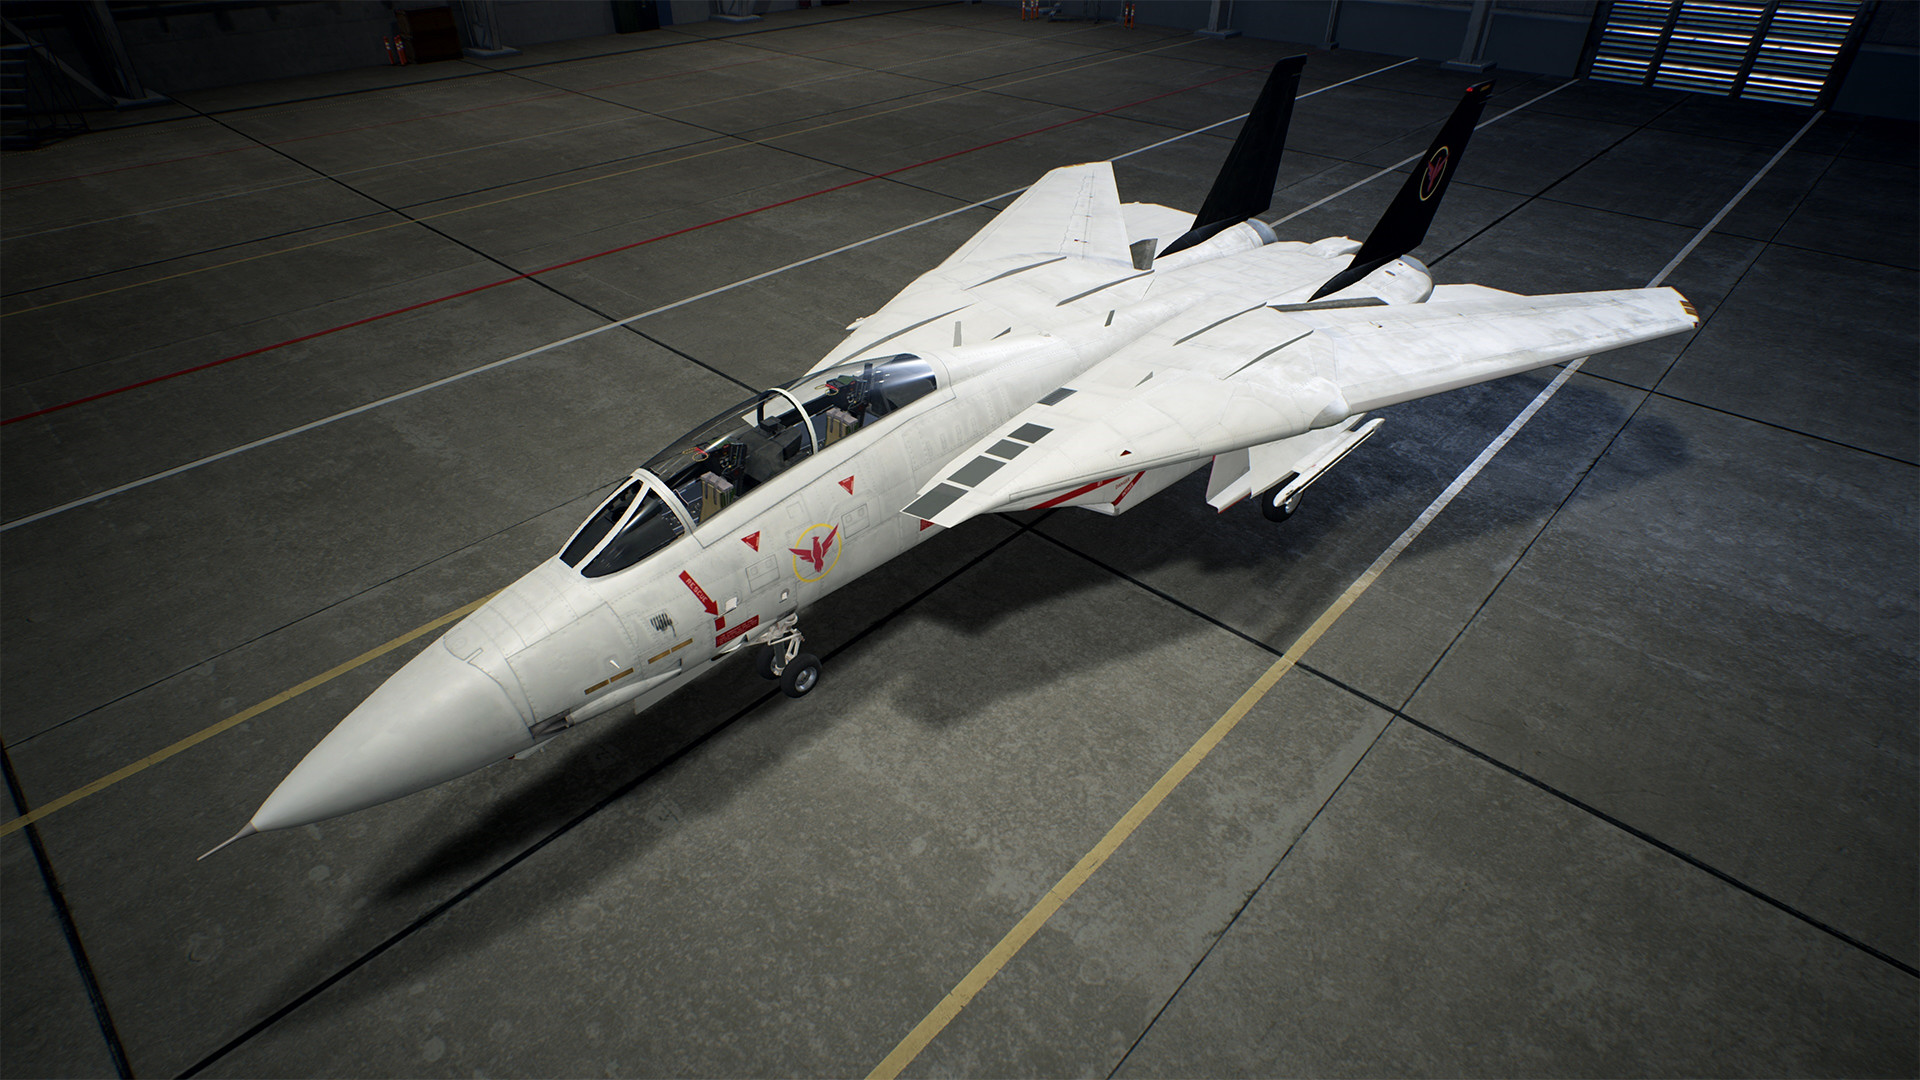 ACE COMBAT 7: SKIES UNKNOWN - TOP GUN: Maverick - Aircraft Set DLC Steam CD Key